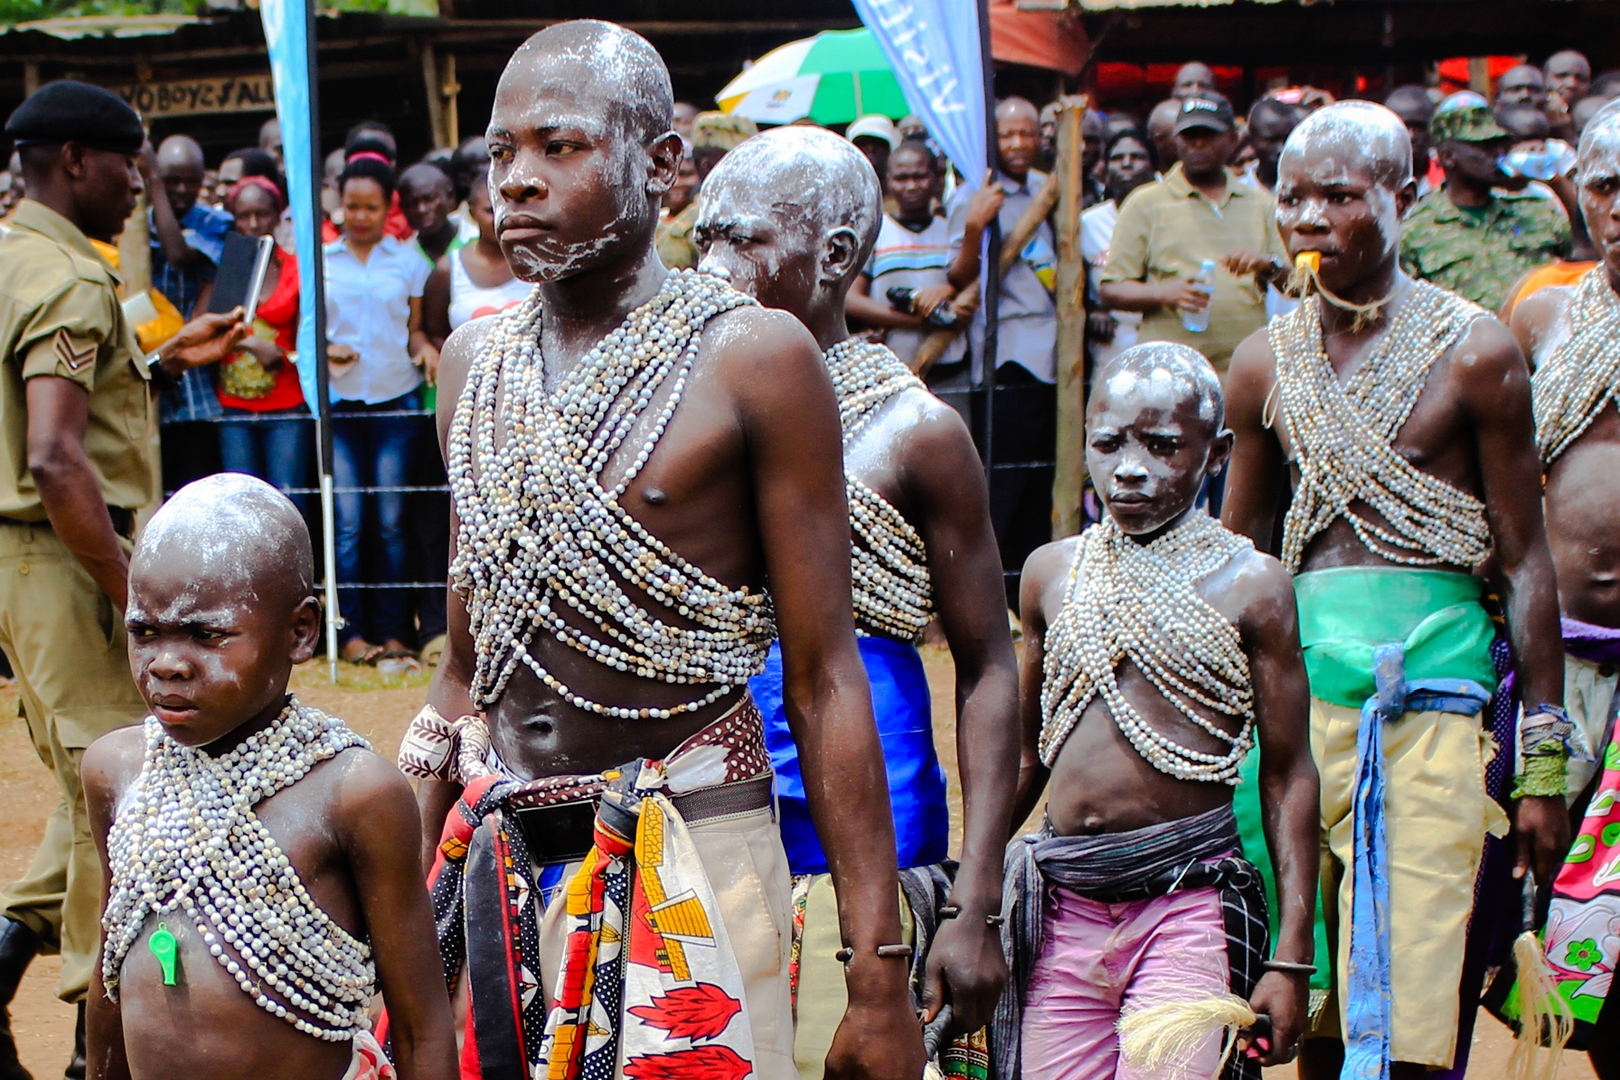 Bagisu cultural experience of circumcision